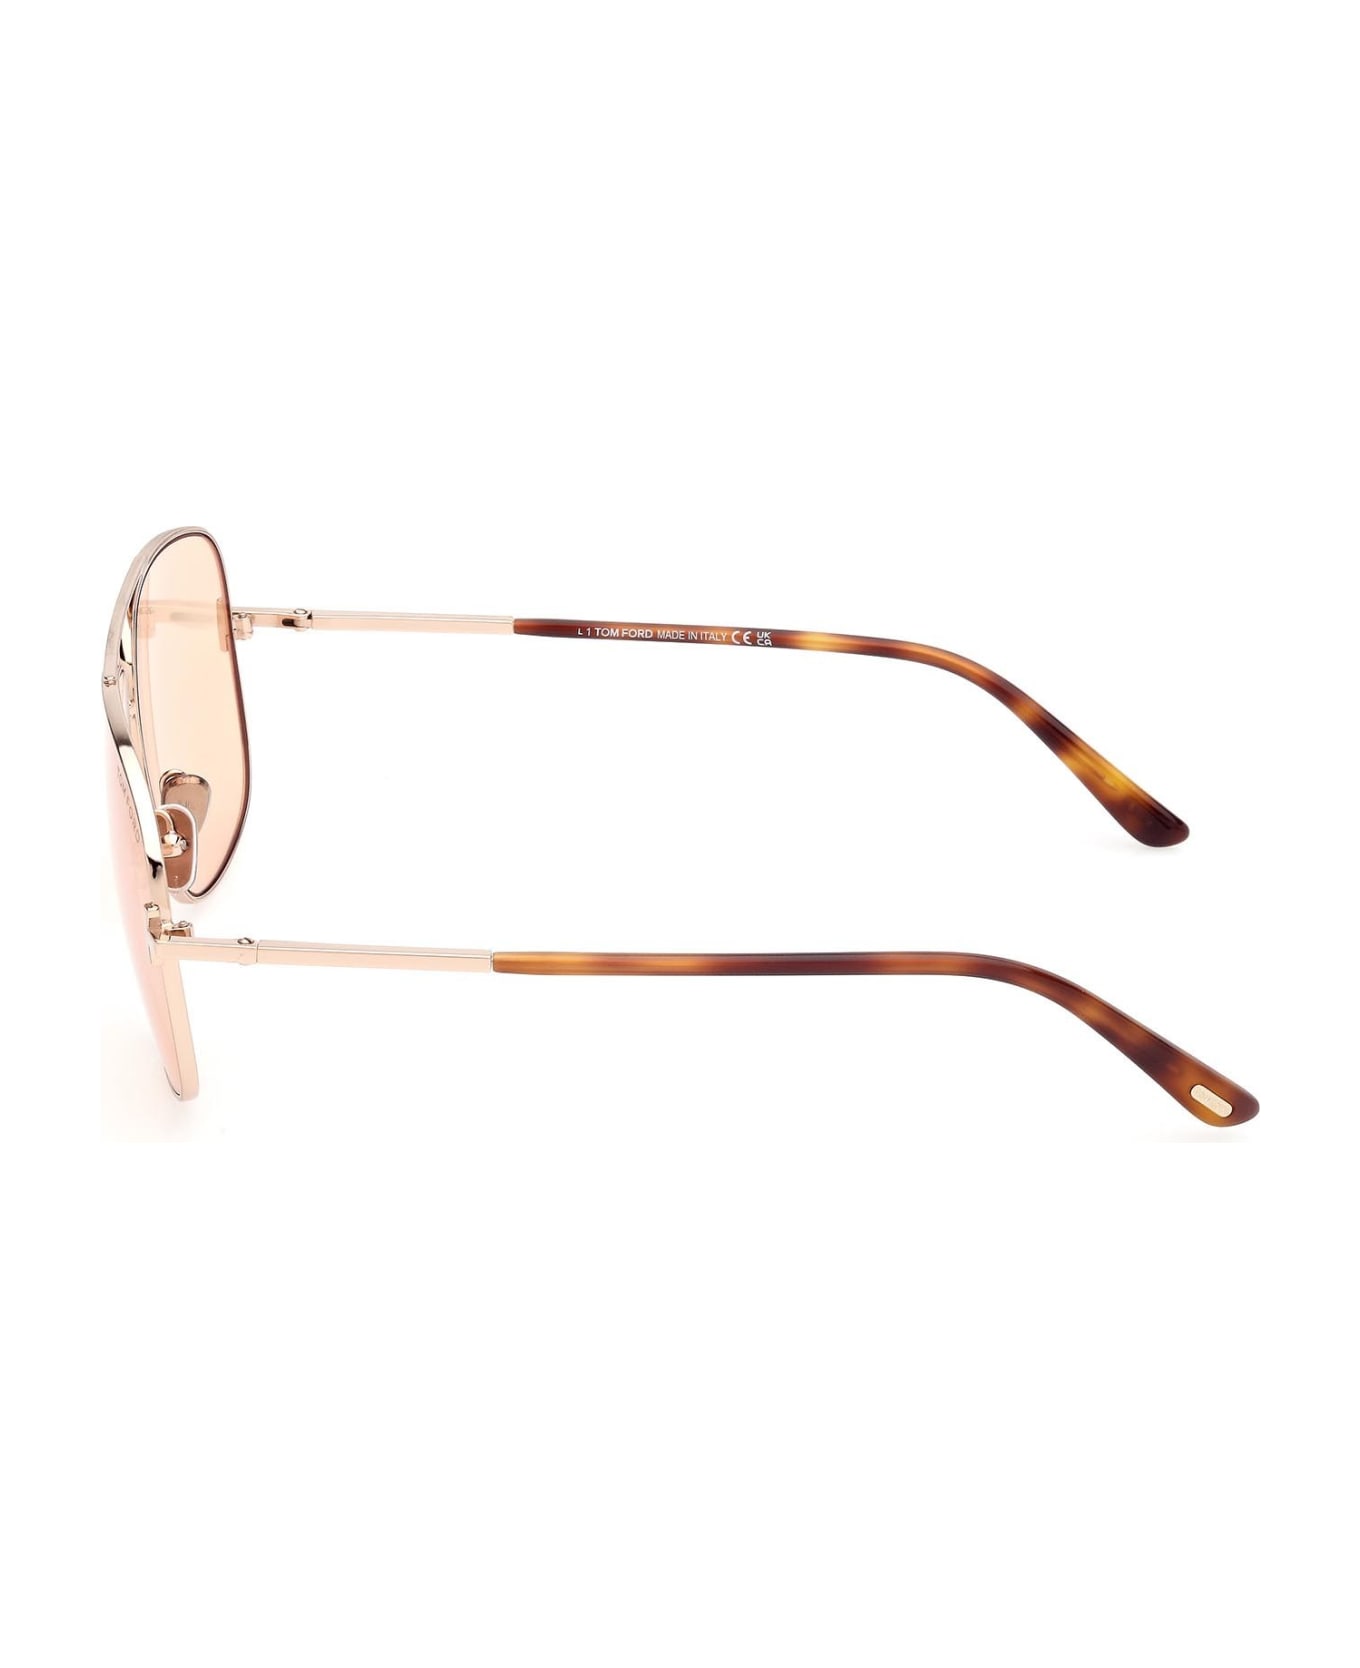 Tom Ford Eyewear Sunglasses - Oro/Marrone